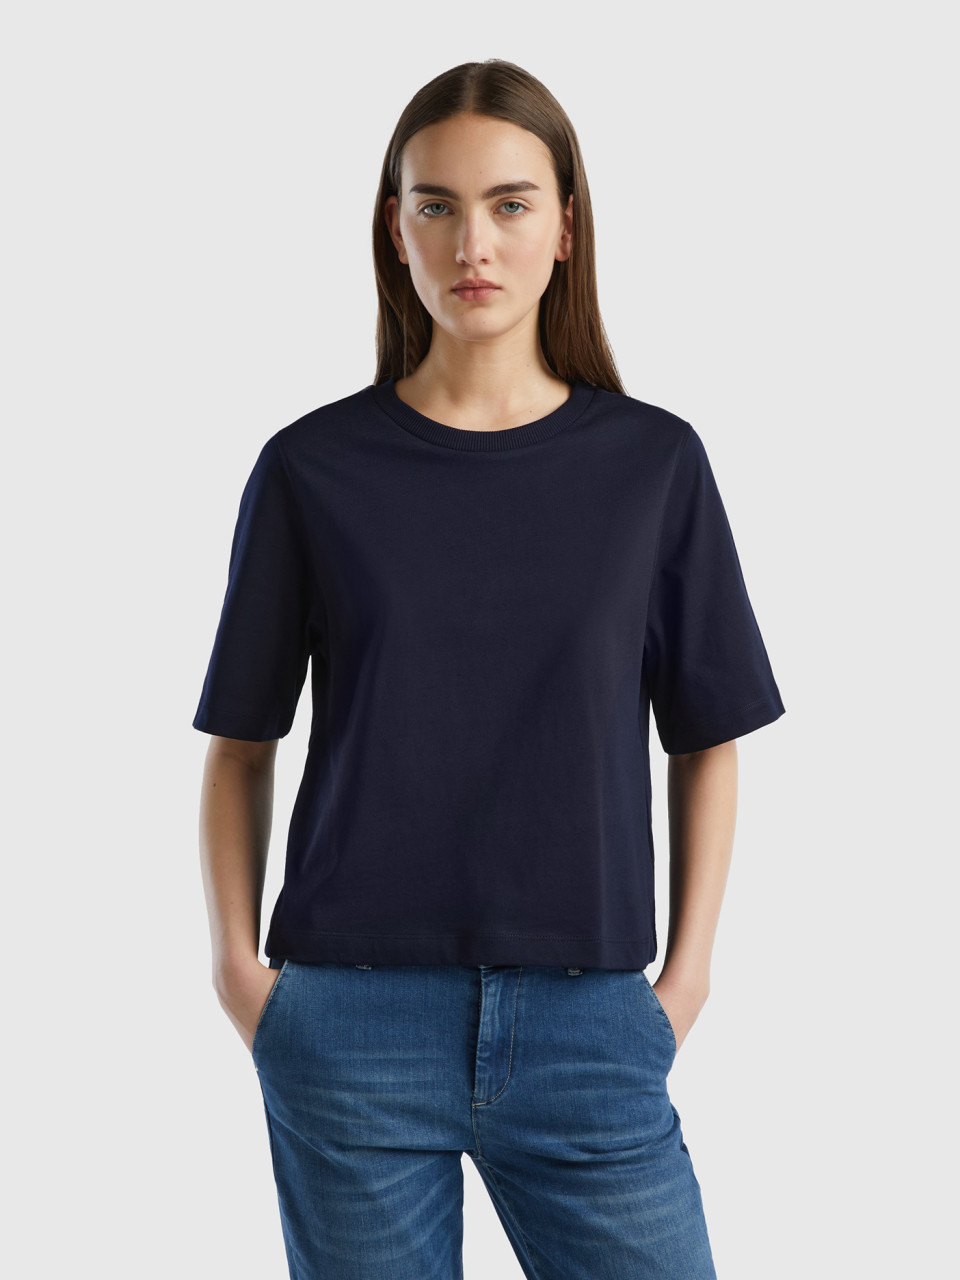 Benetton, 100% Cotton Boxy Fit T-shirt, Dark Blue, Women